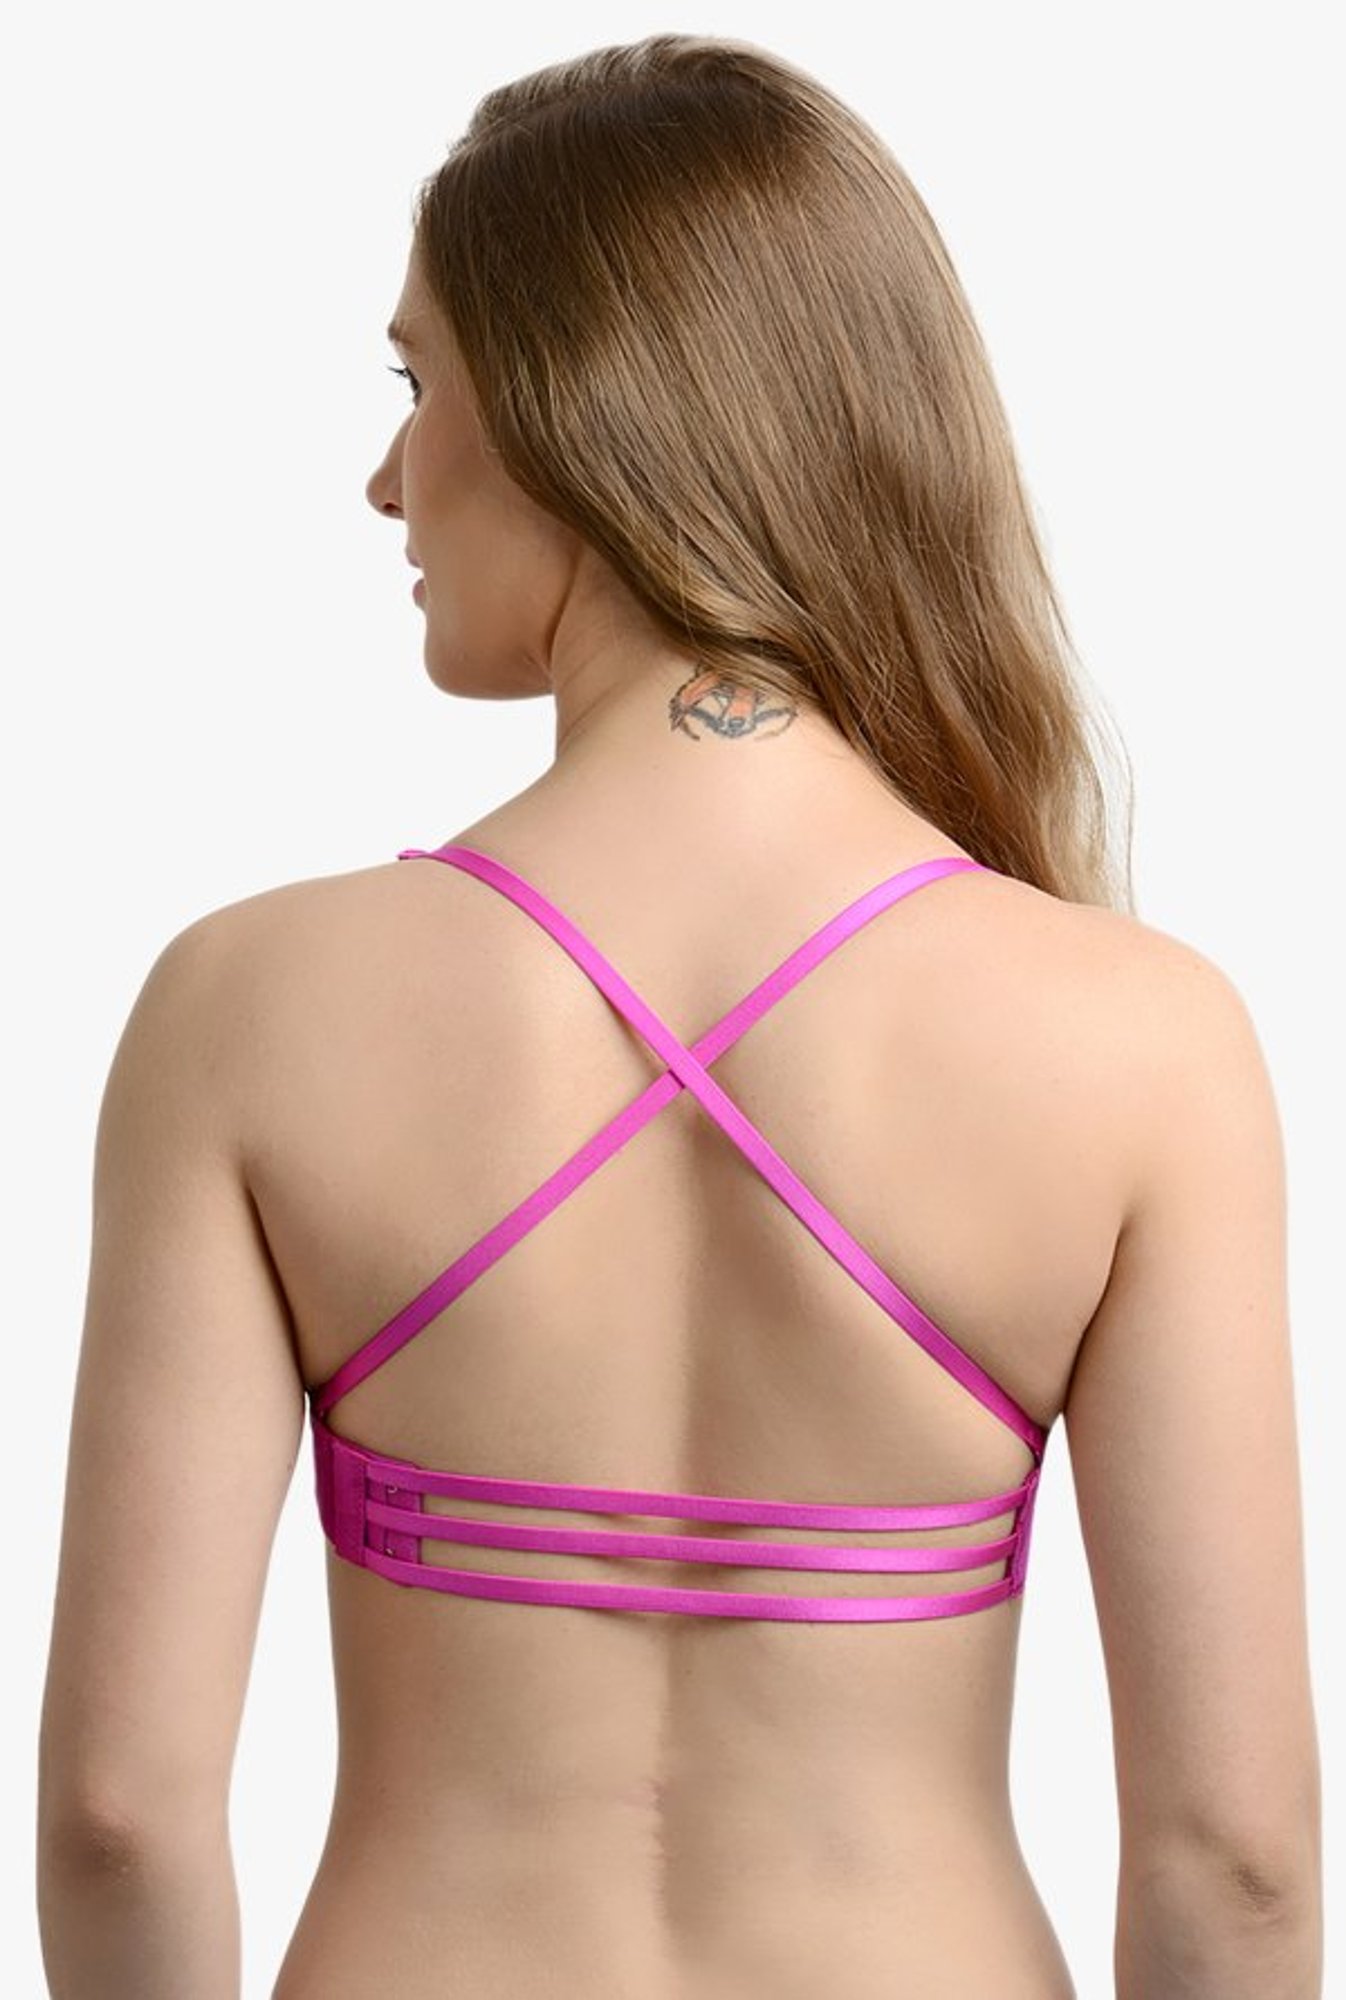 Buy Da Intimo Neon Green One Shoulder Bralette for Women Online @ Tata CLiQ